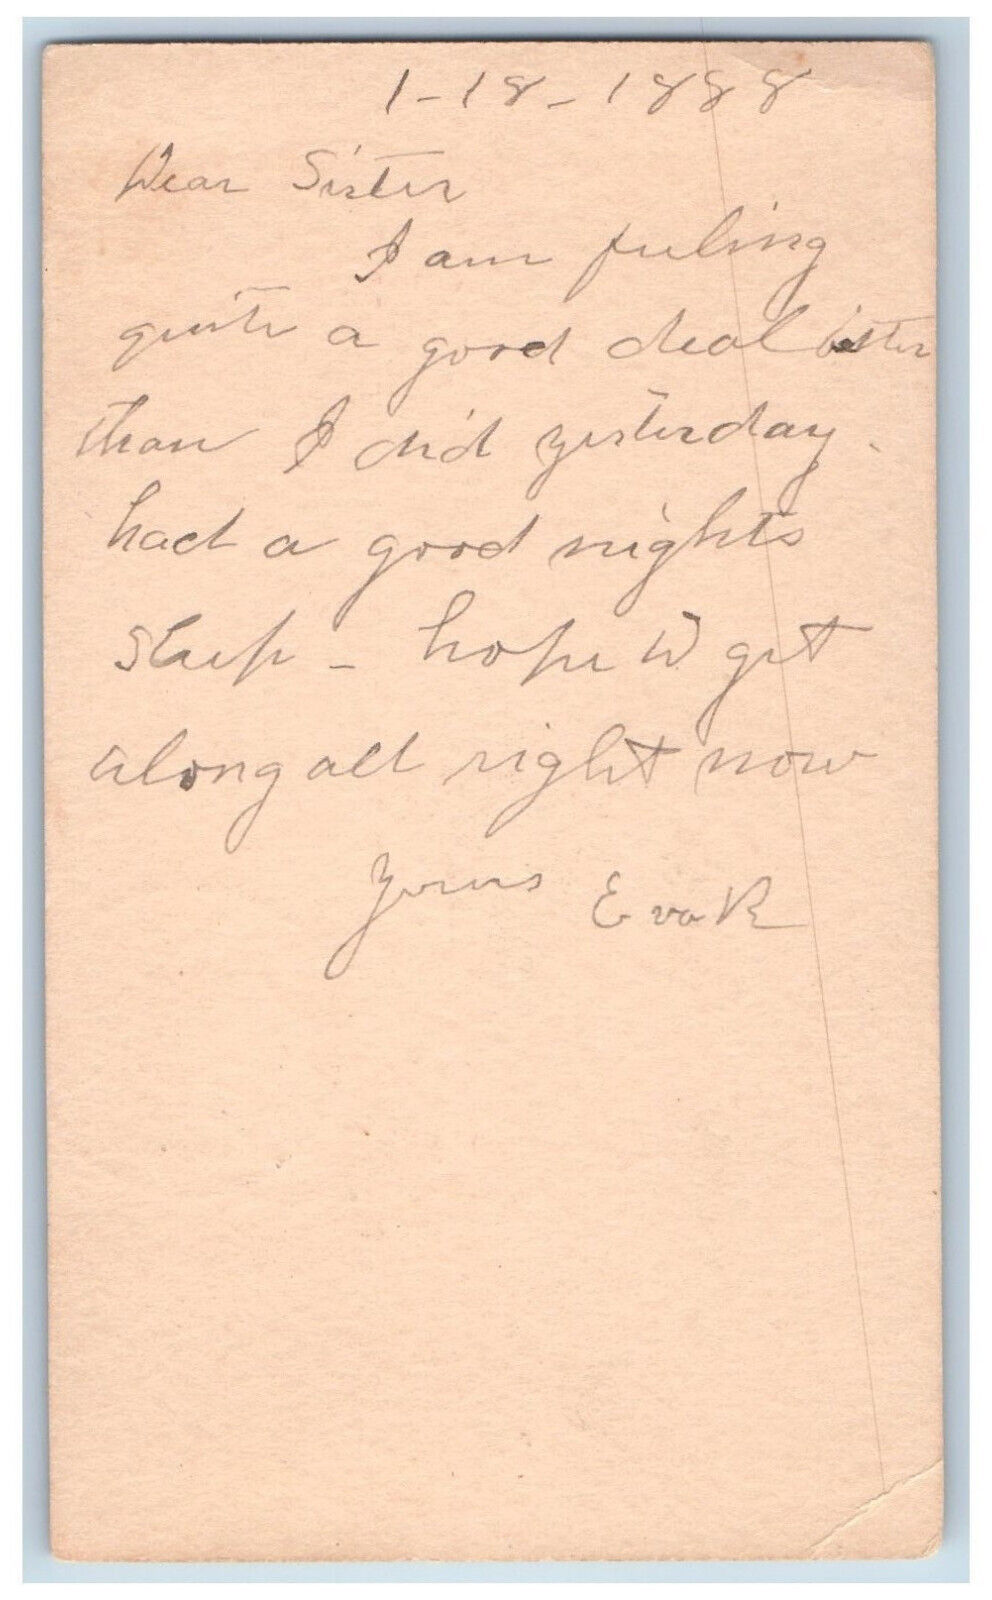 Tipton Iowa IA Stanwood IA Postal Card Letter to Sister 1888 Antique